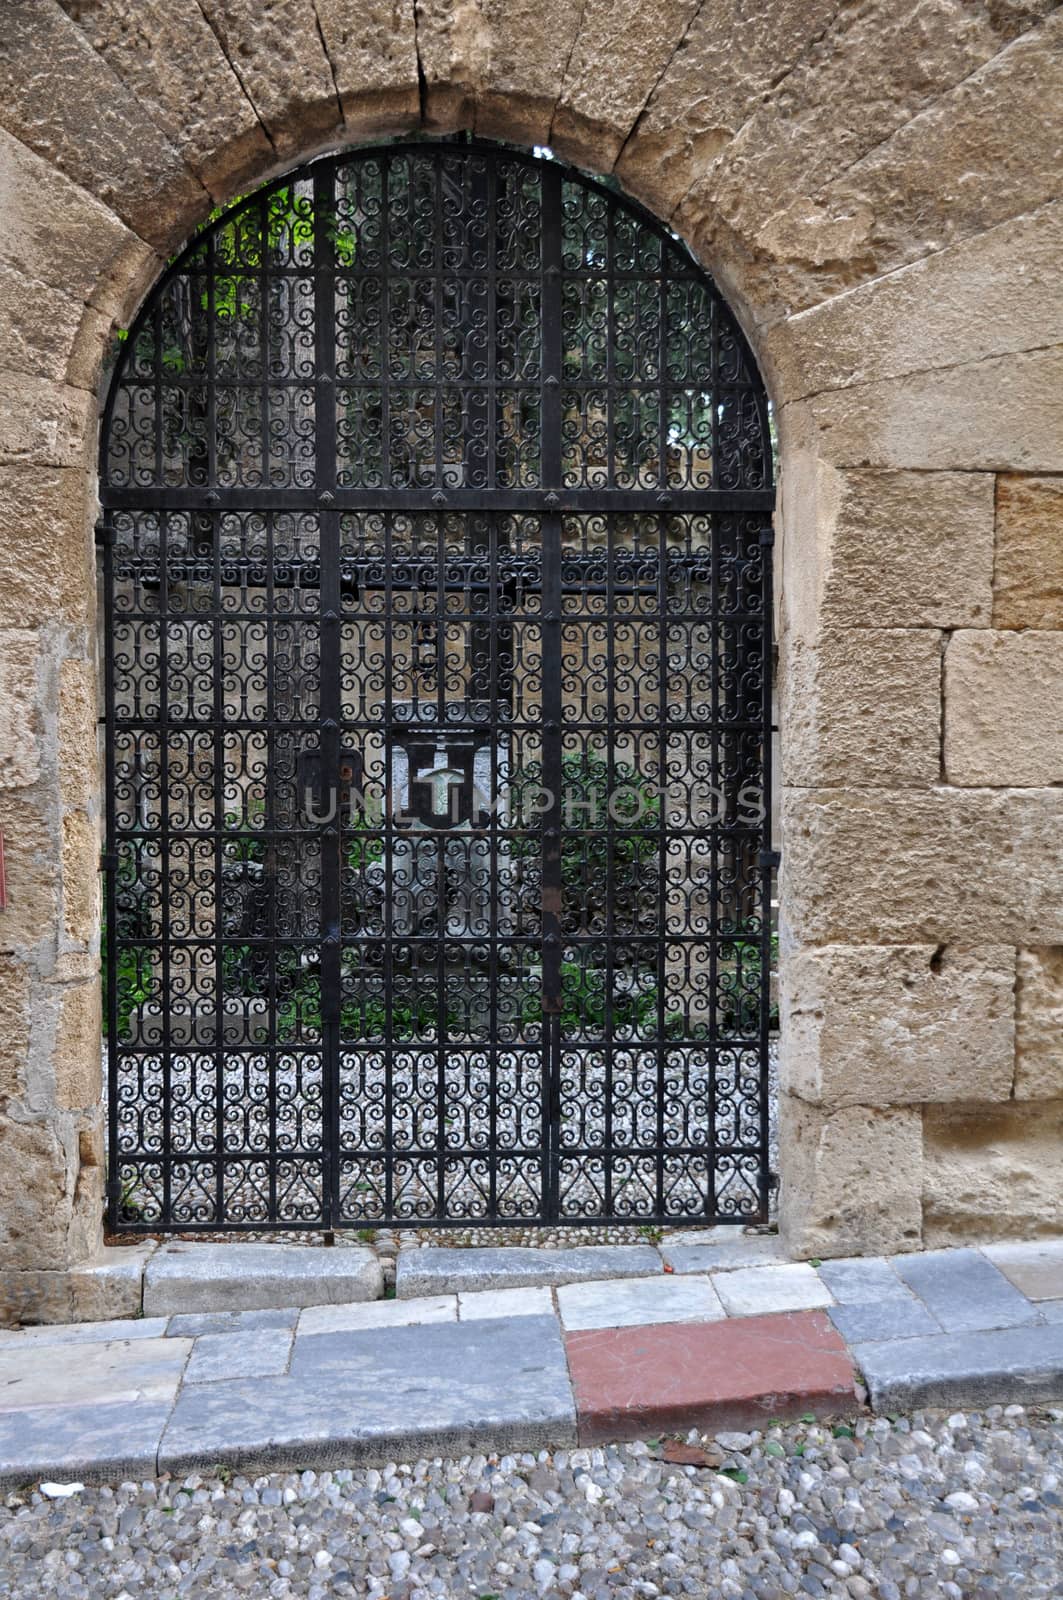 Traditional door on the Mediterranean Greek island of Rhodes